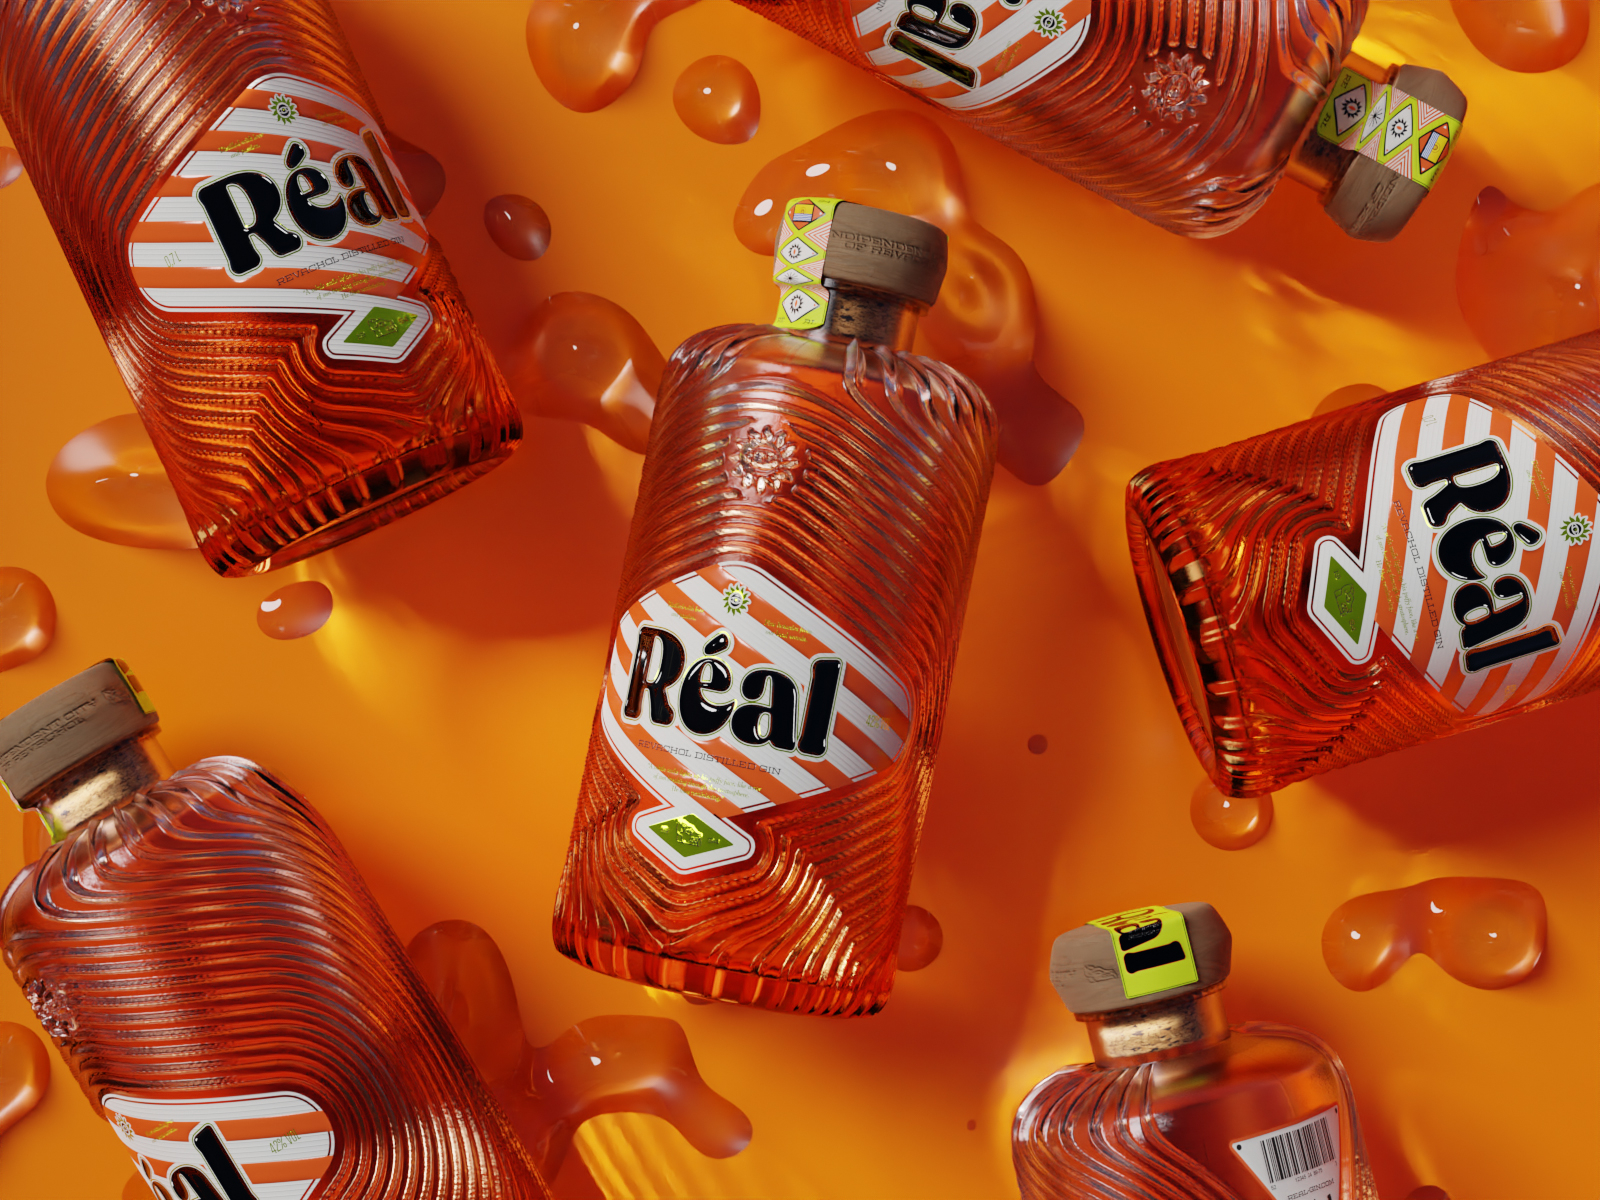 Réal Gin - Product Shot